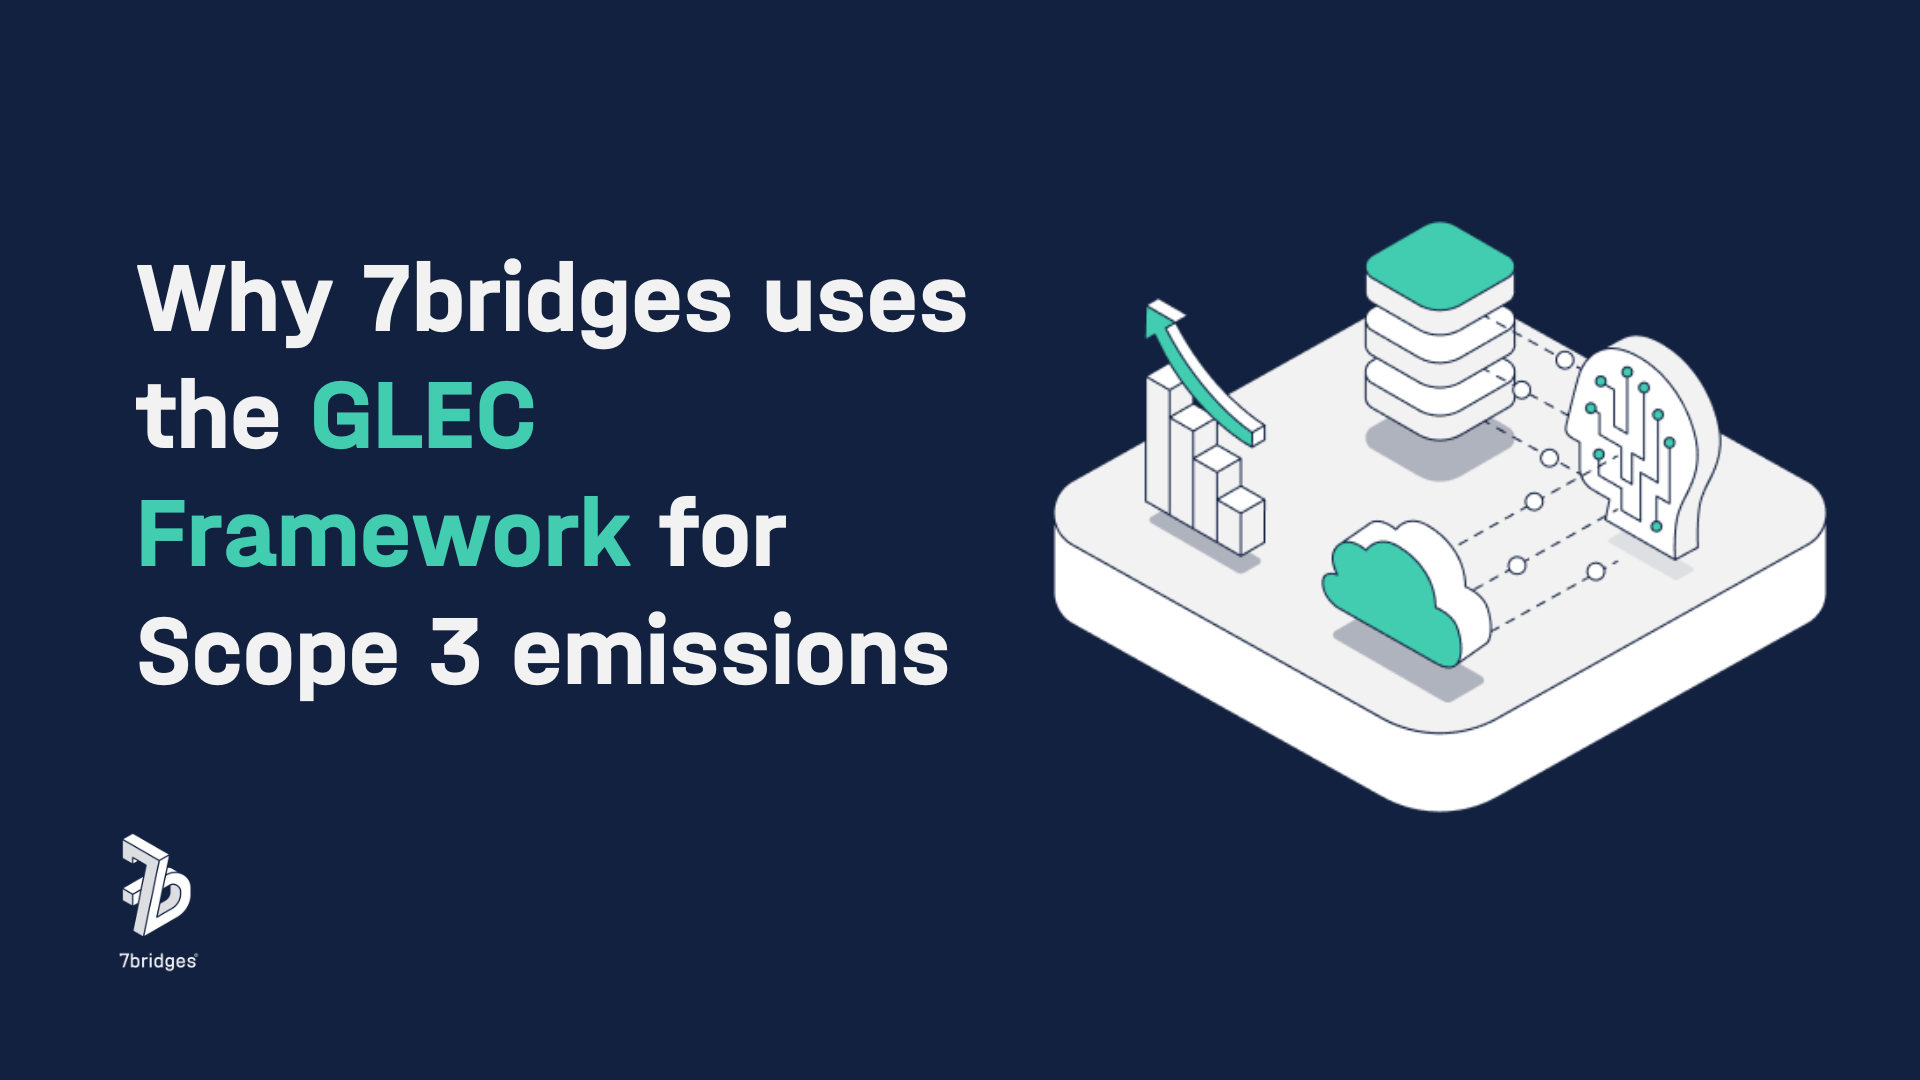 Blog title 'Why 7bridges uses the GLEC Framework for Scope 3 emissions' with platform image on blue background